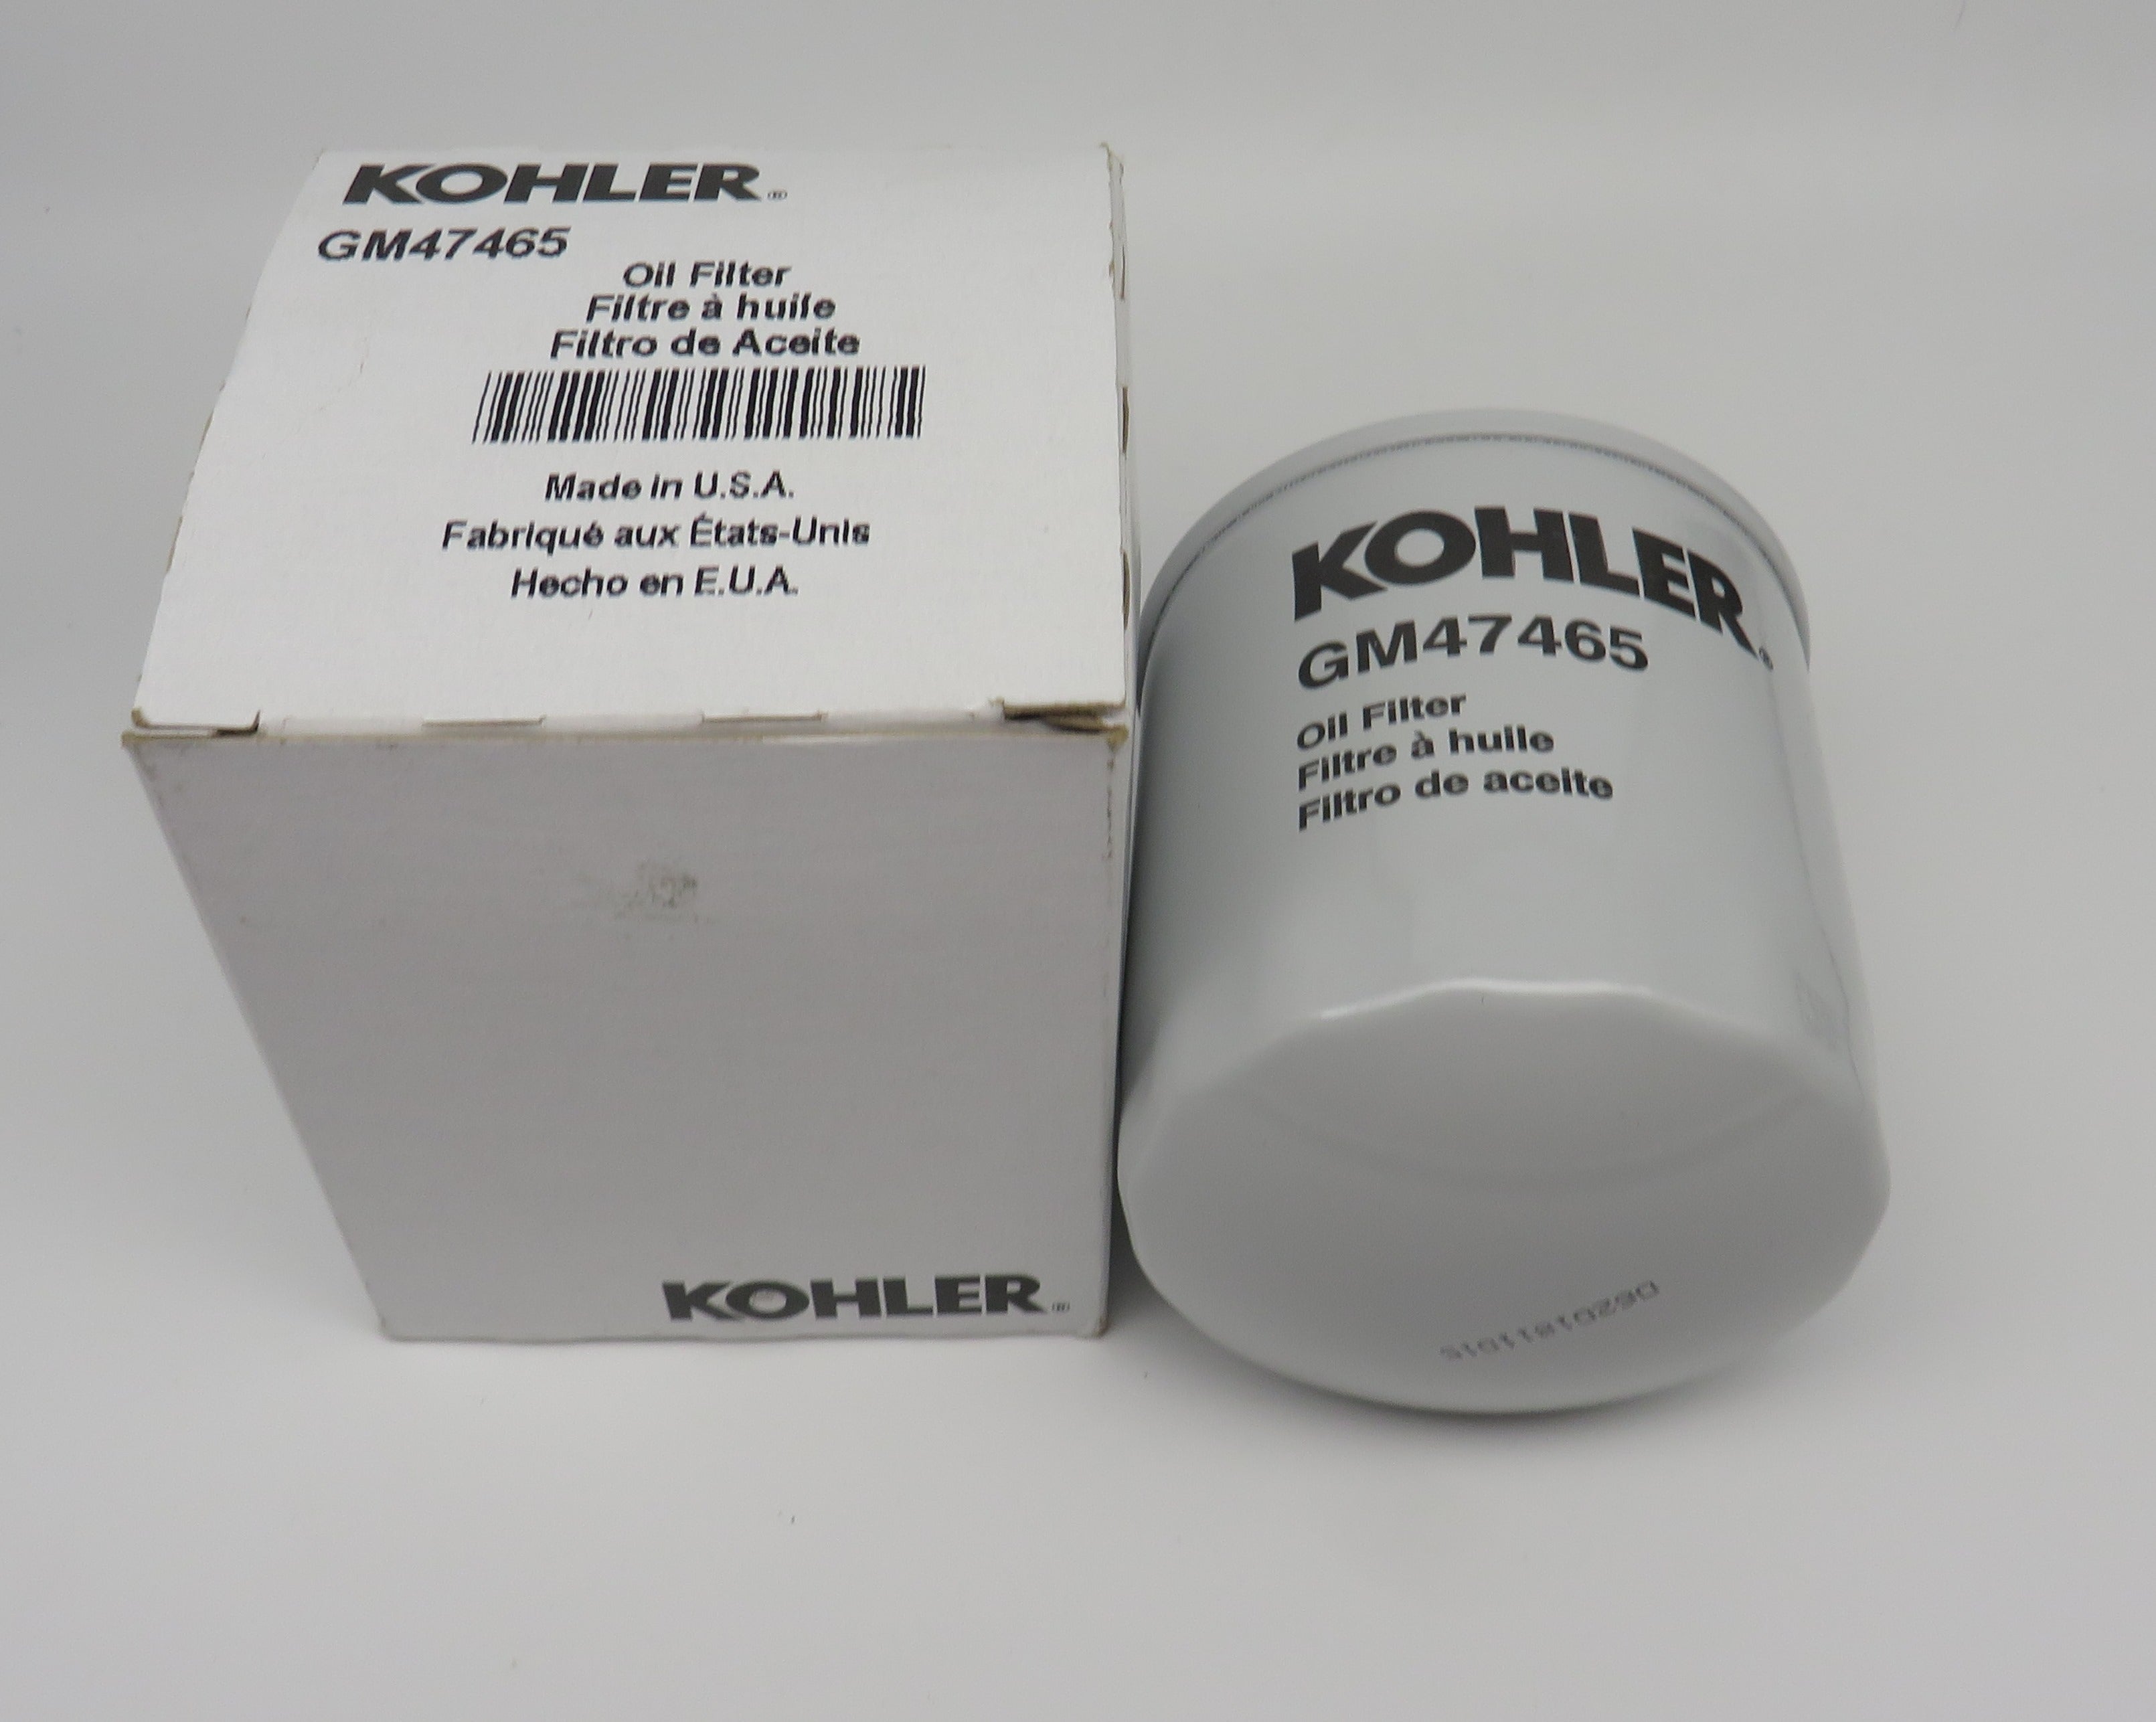 GM47465 Kohler Generator Oil Filter replaces 252989 & 229841